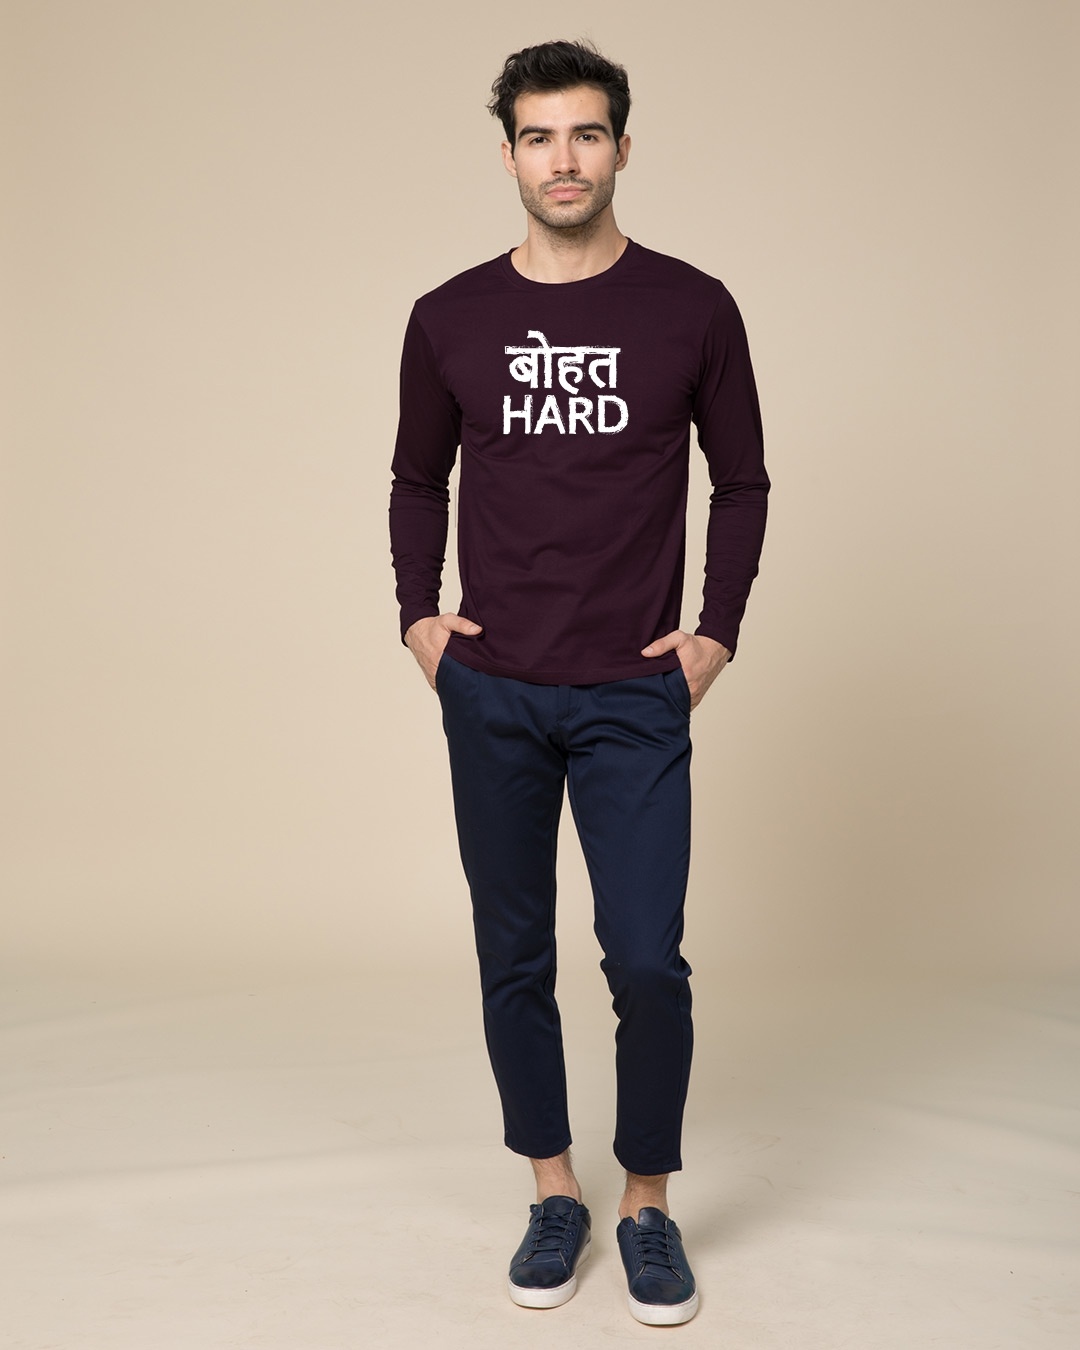 Shop Bht Hrd Full Sleeve T-Shirt-Design